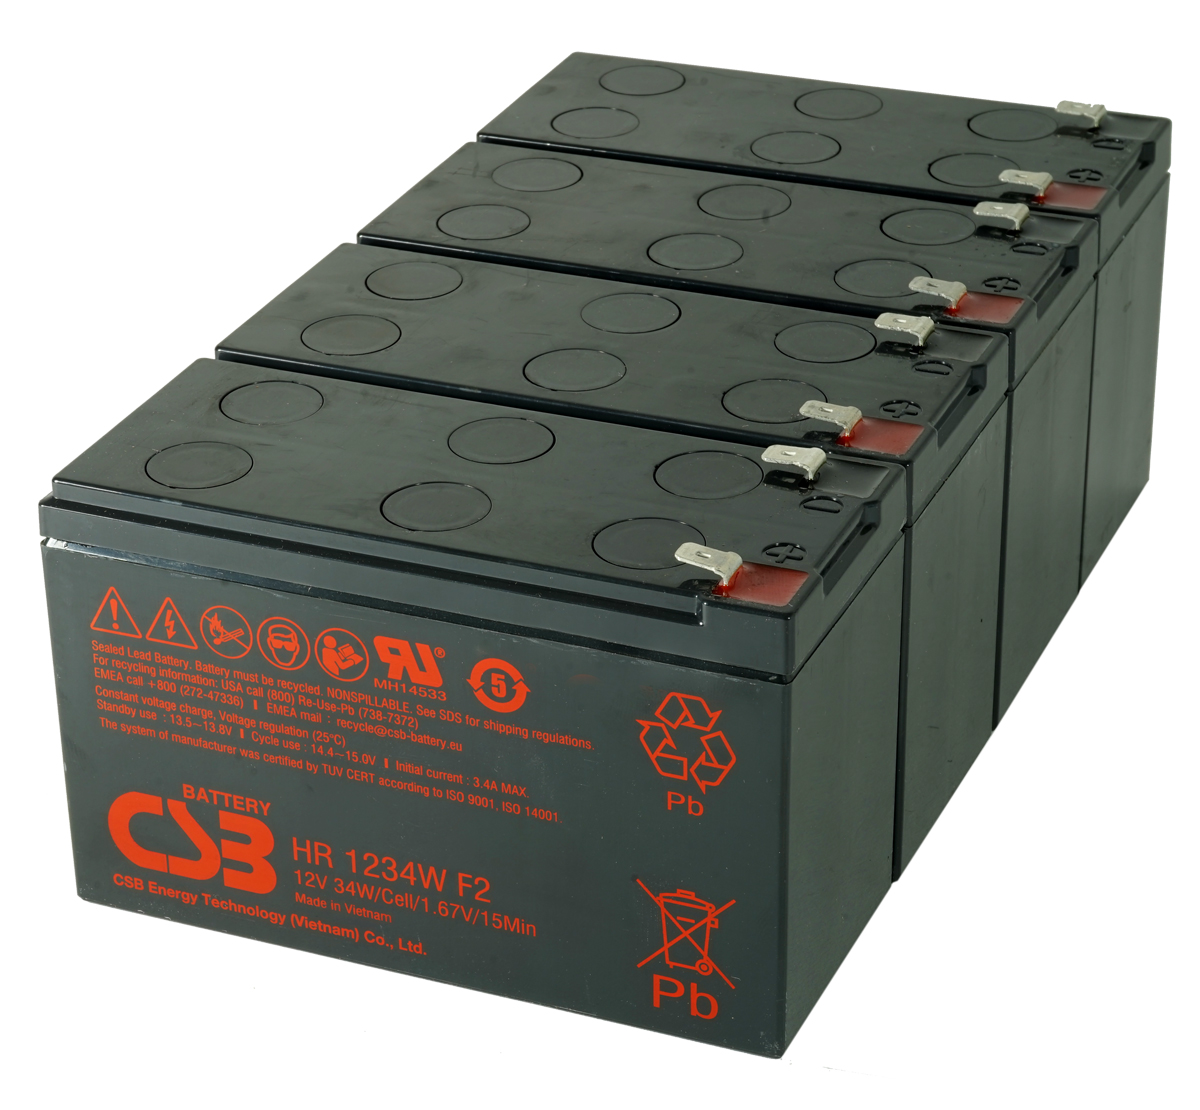 MDSV204 UPS Battery Kit - Replaces APC RBCV204